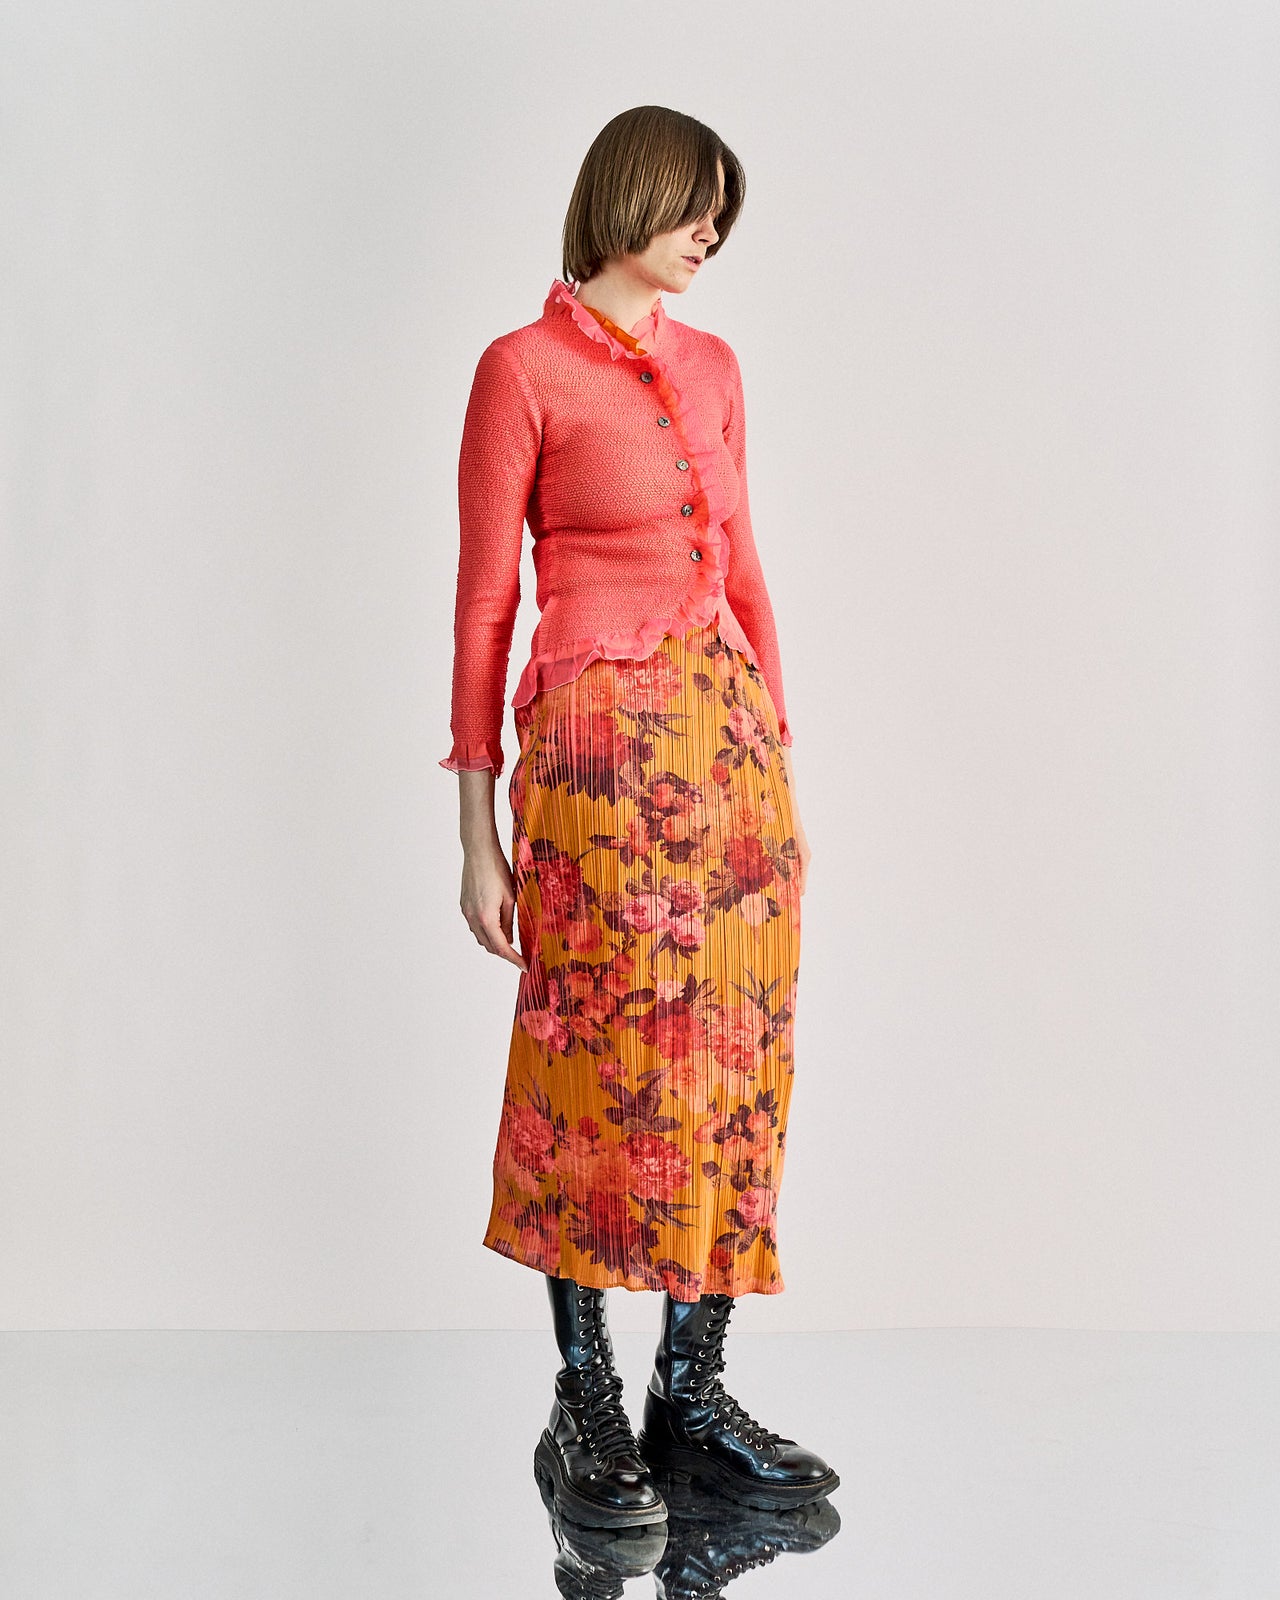 Issey Miyake Pleats Please 1994 floral midi skirt